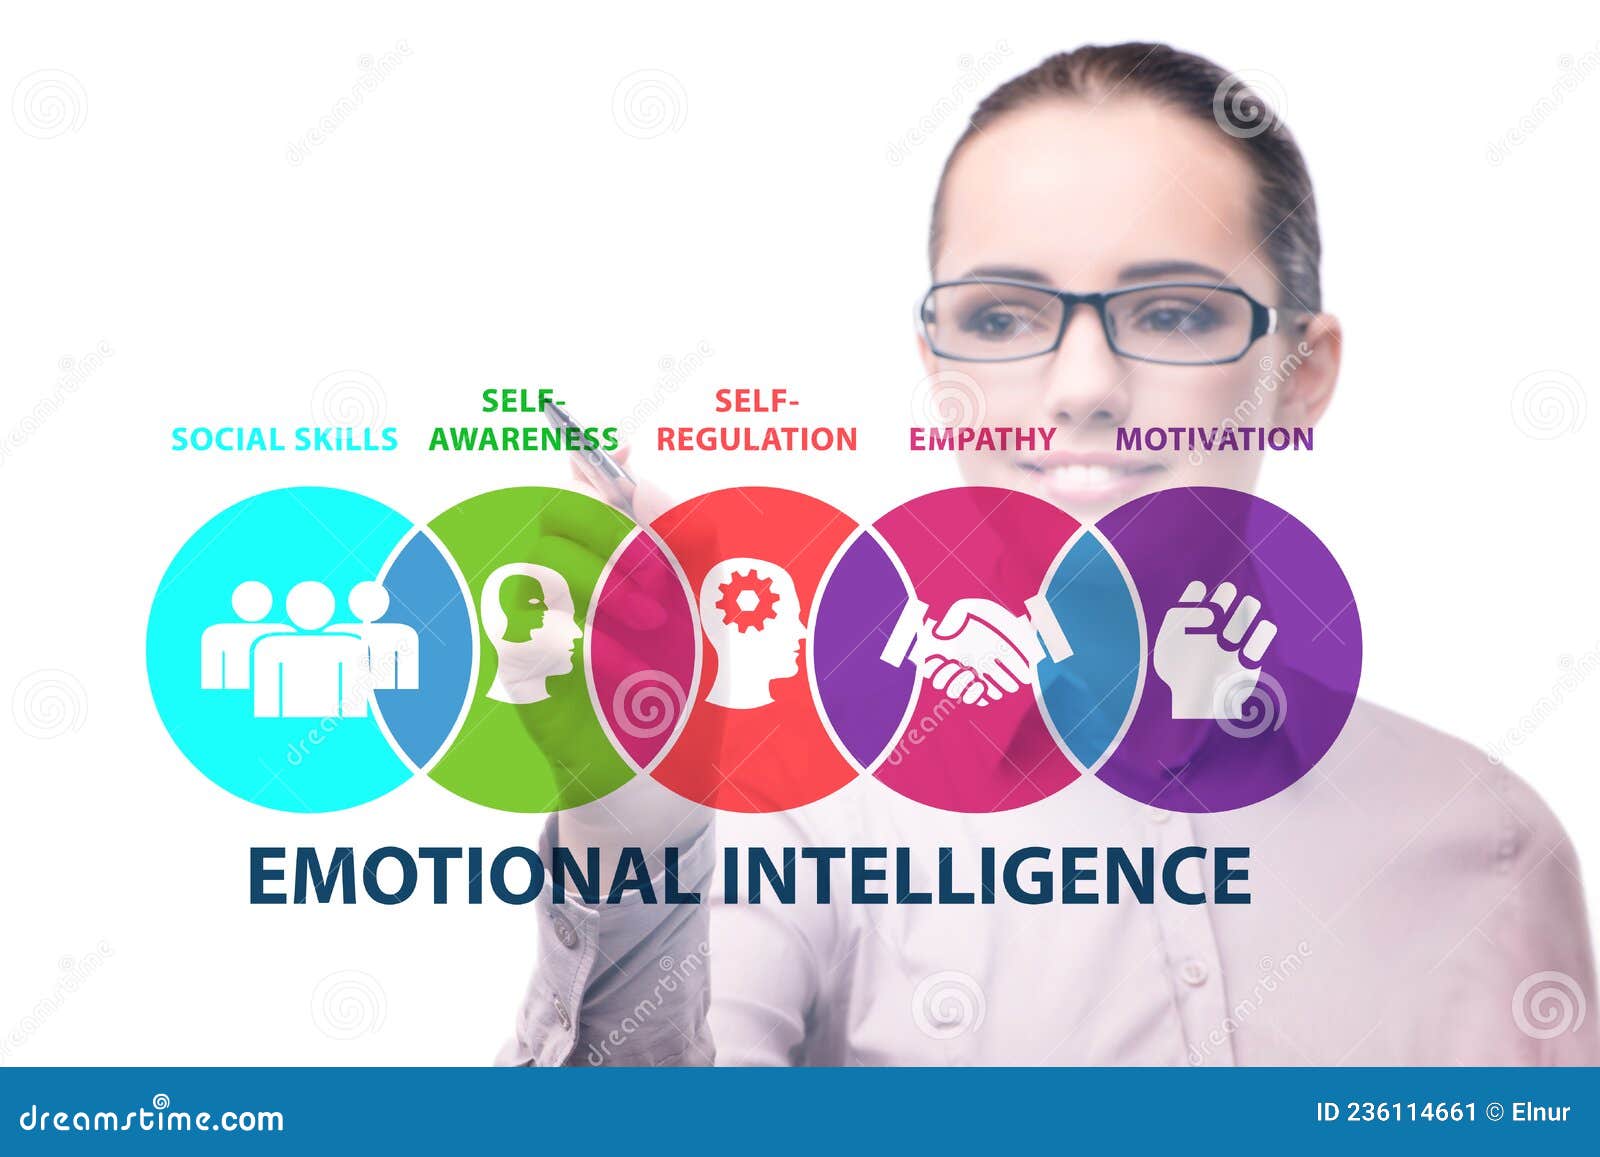 Emotional Intelligence Concept with Businesswoman Stock Image - Image ...